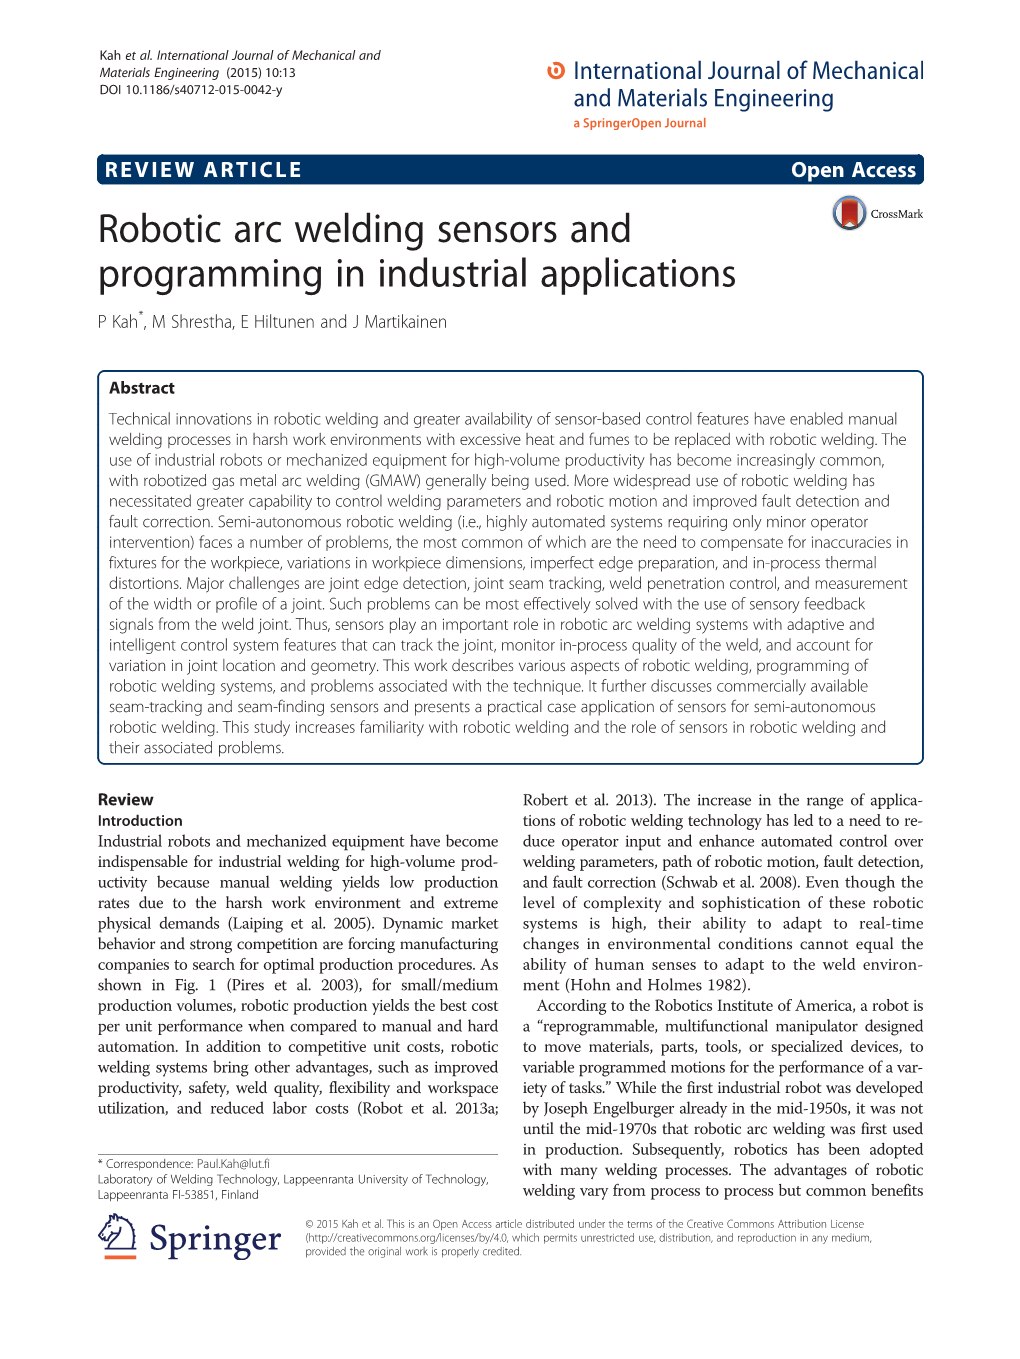 Robotic Arc Welding Sensors and Programming in Industrial Applications P Kah*, M Shrestha, E Hiltunen and J Martikainen